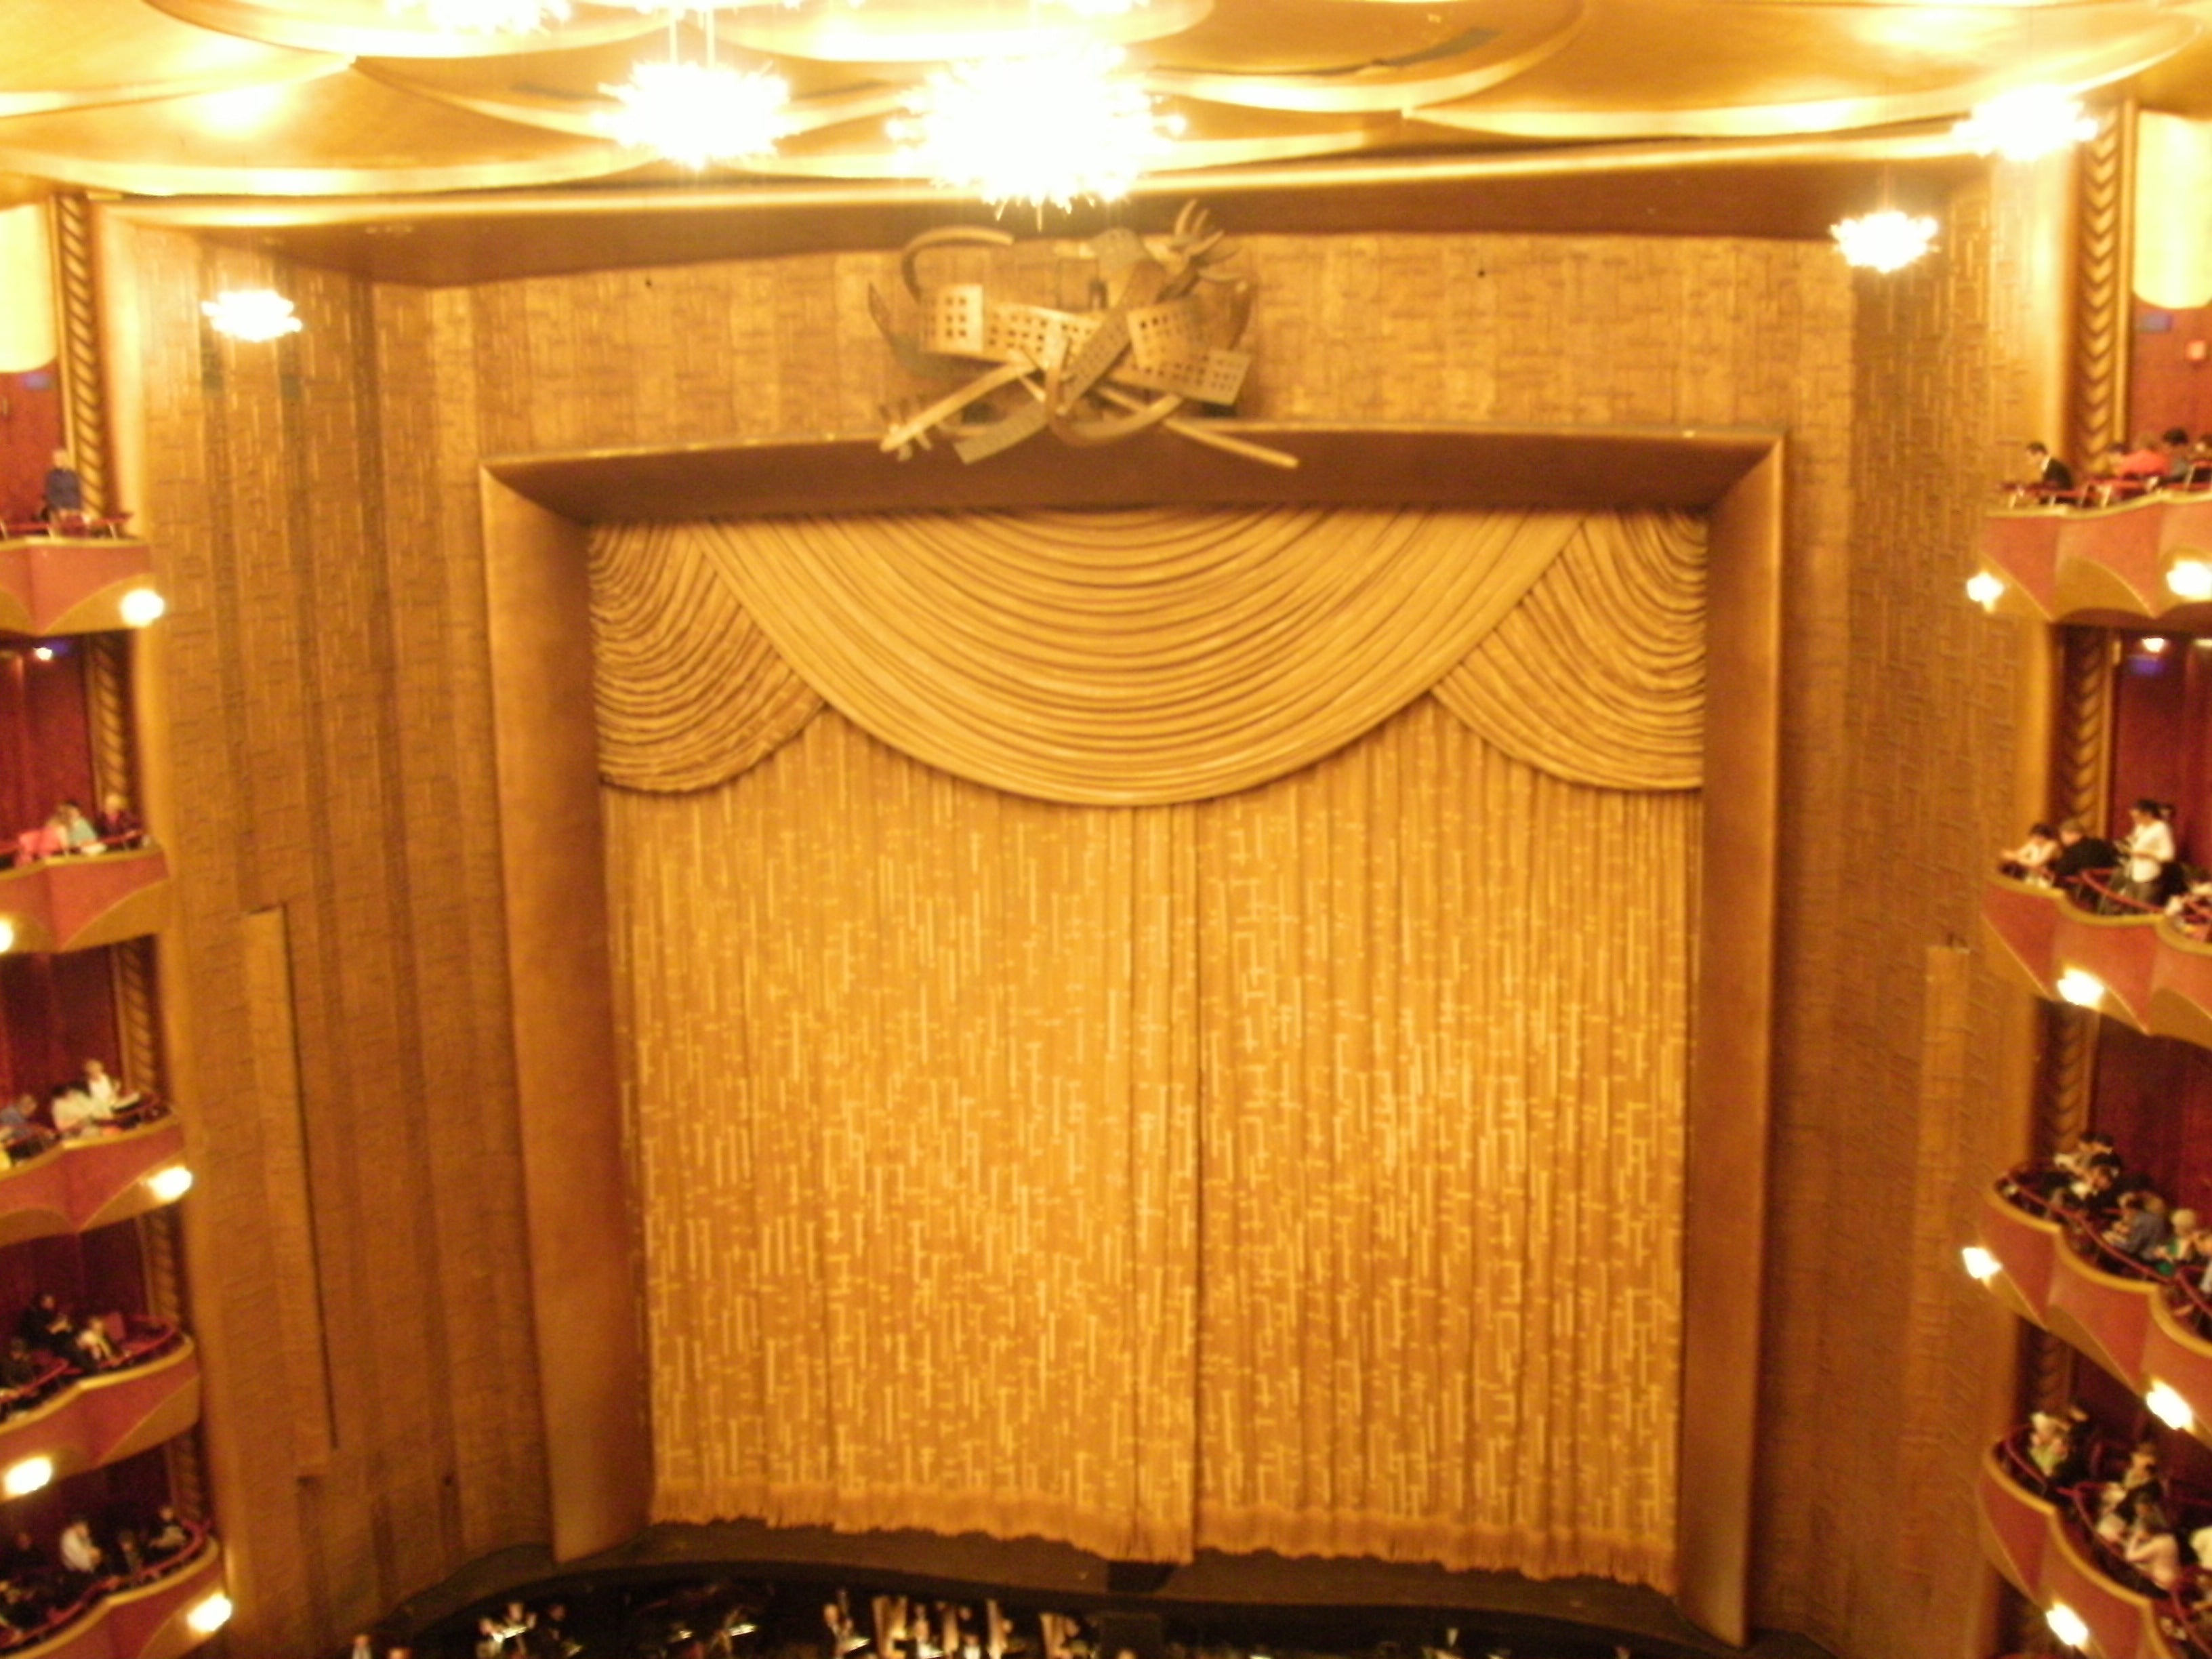 Golden Silk curtain, met opera, anticipating an amazing performance.